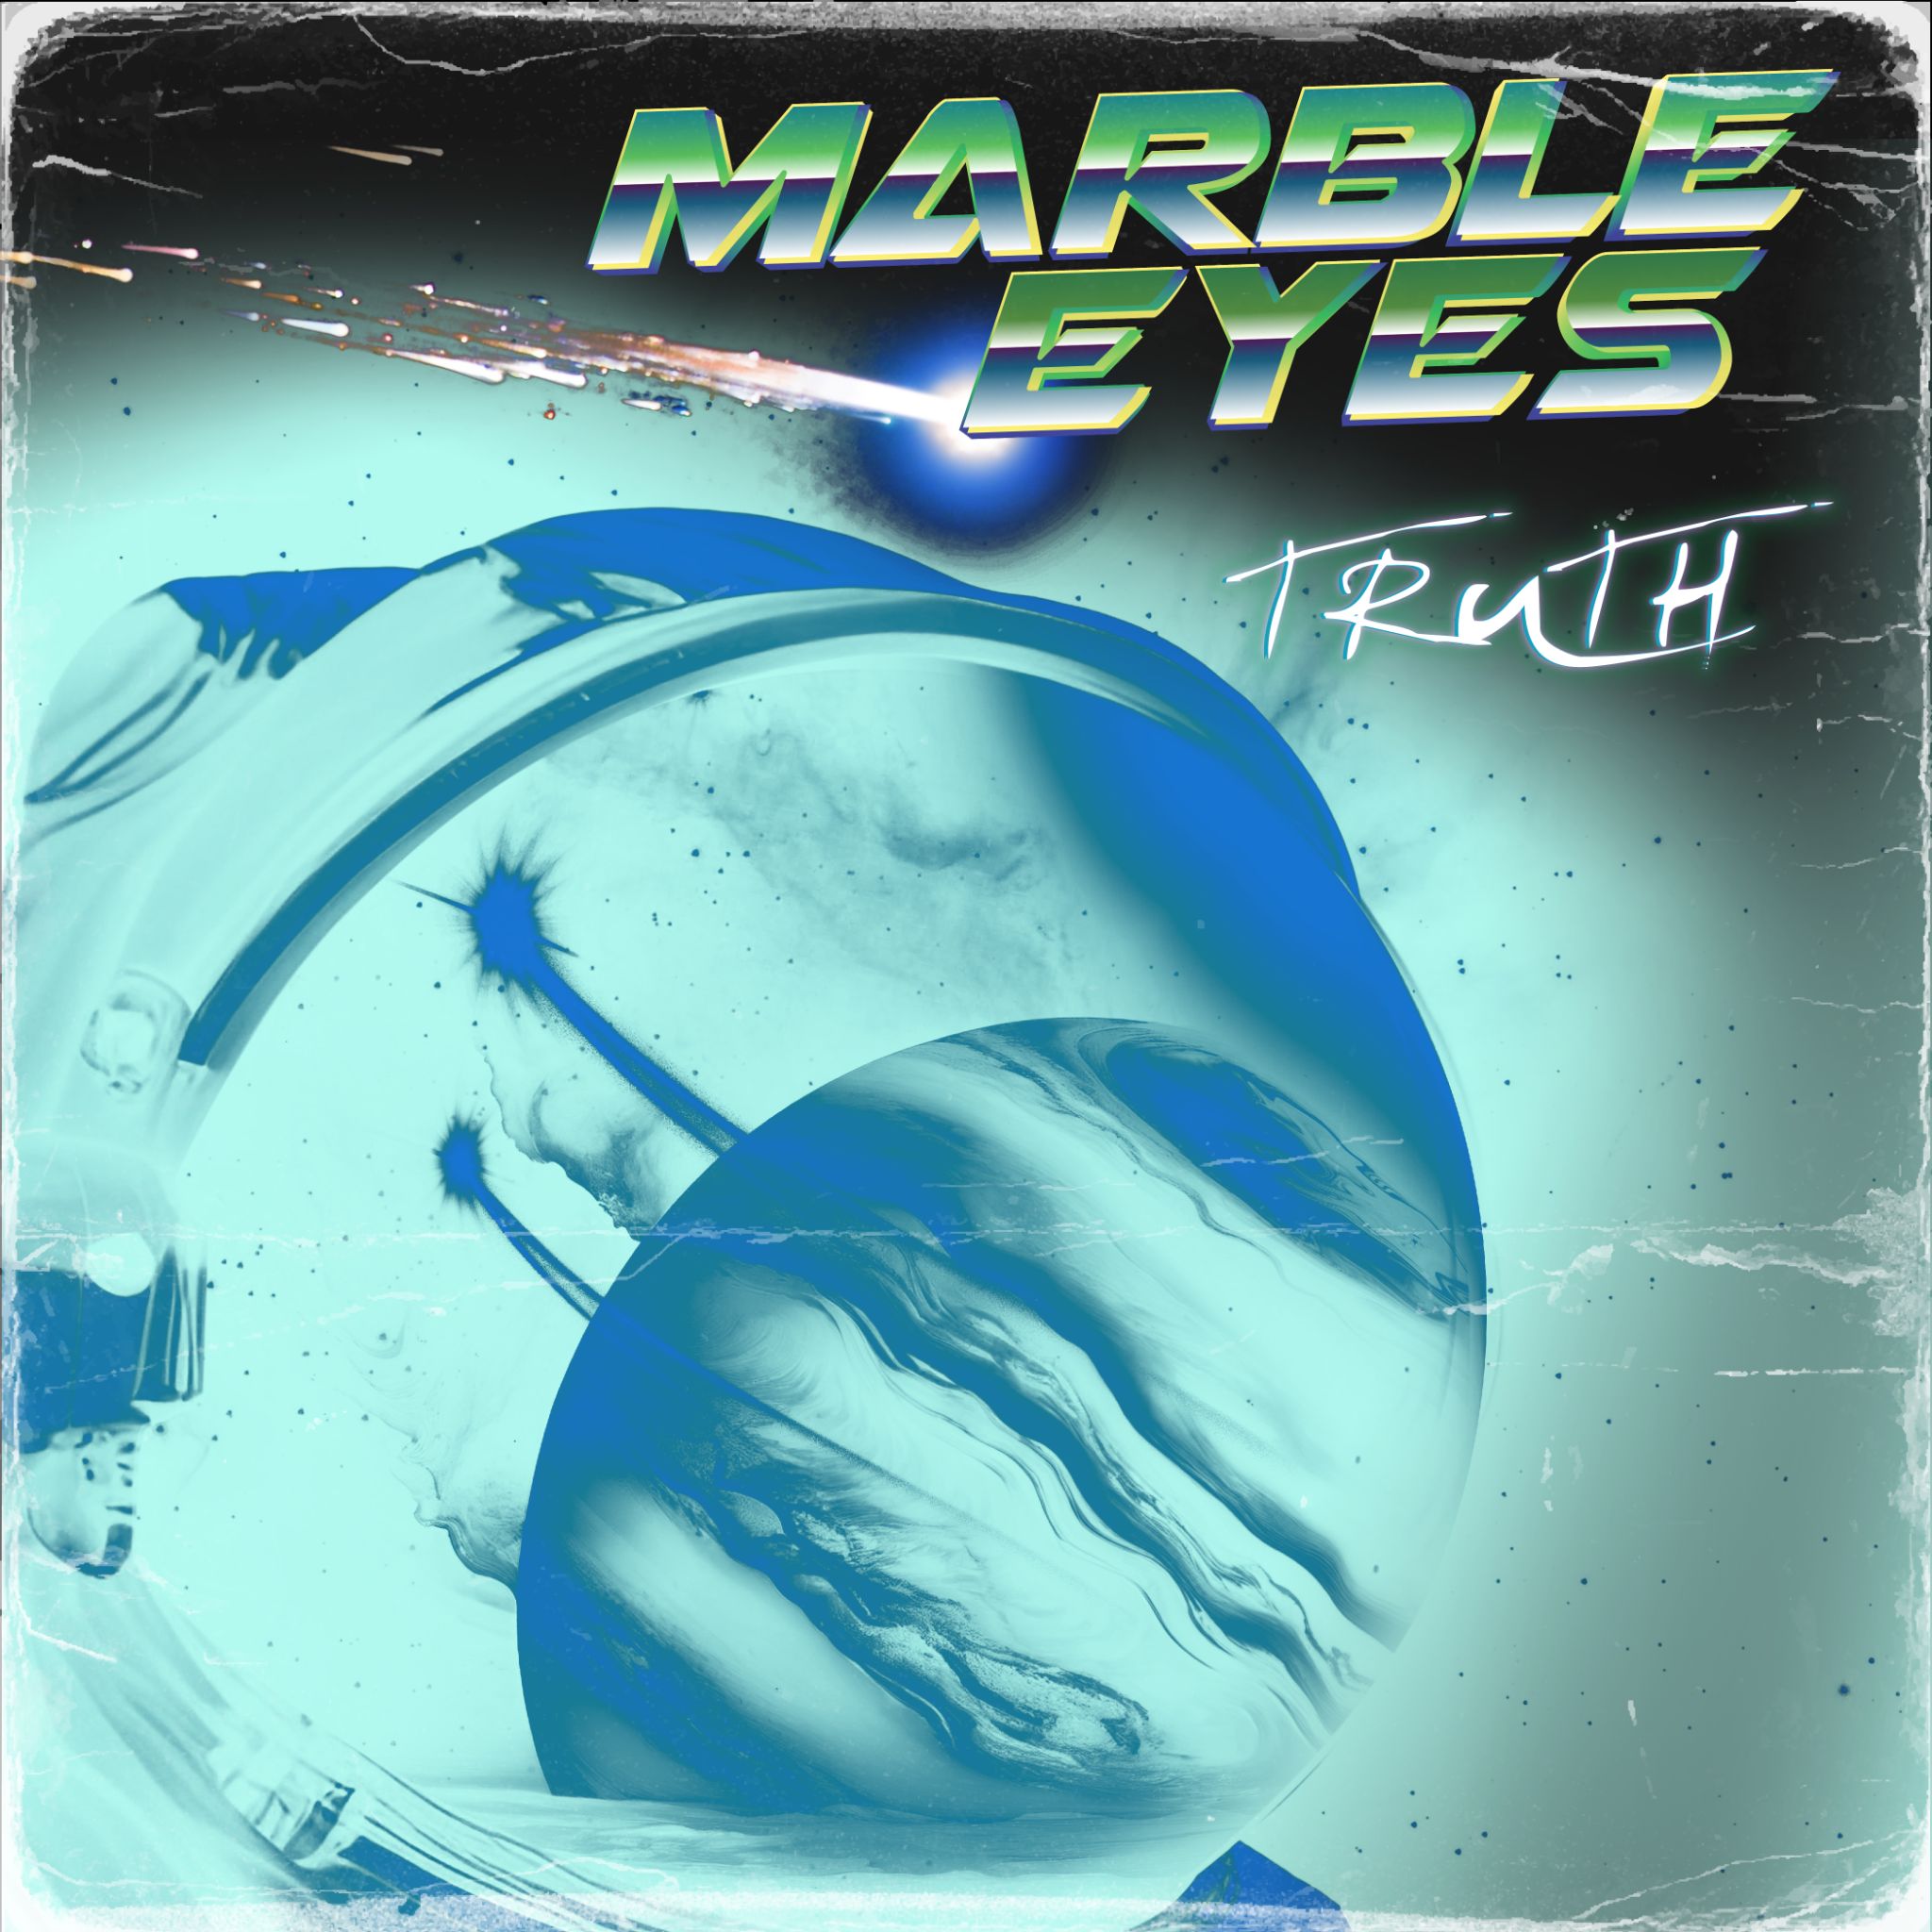 Marble Eyes: "Truth"